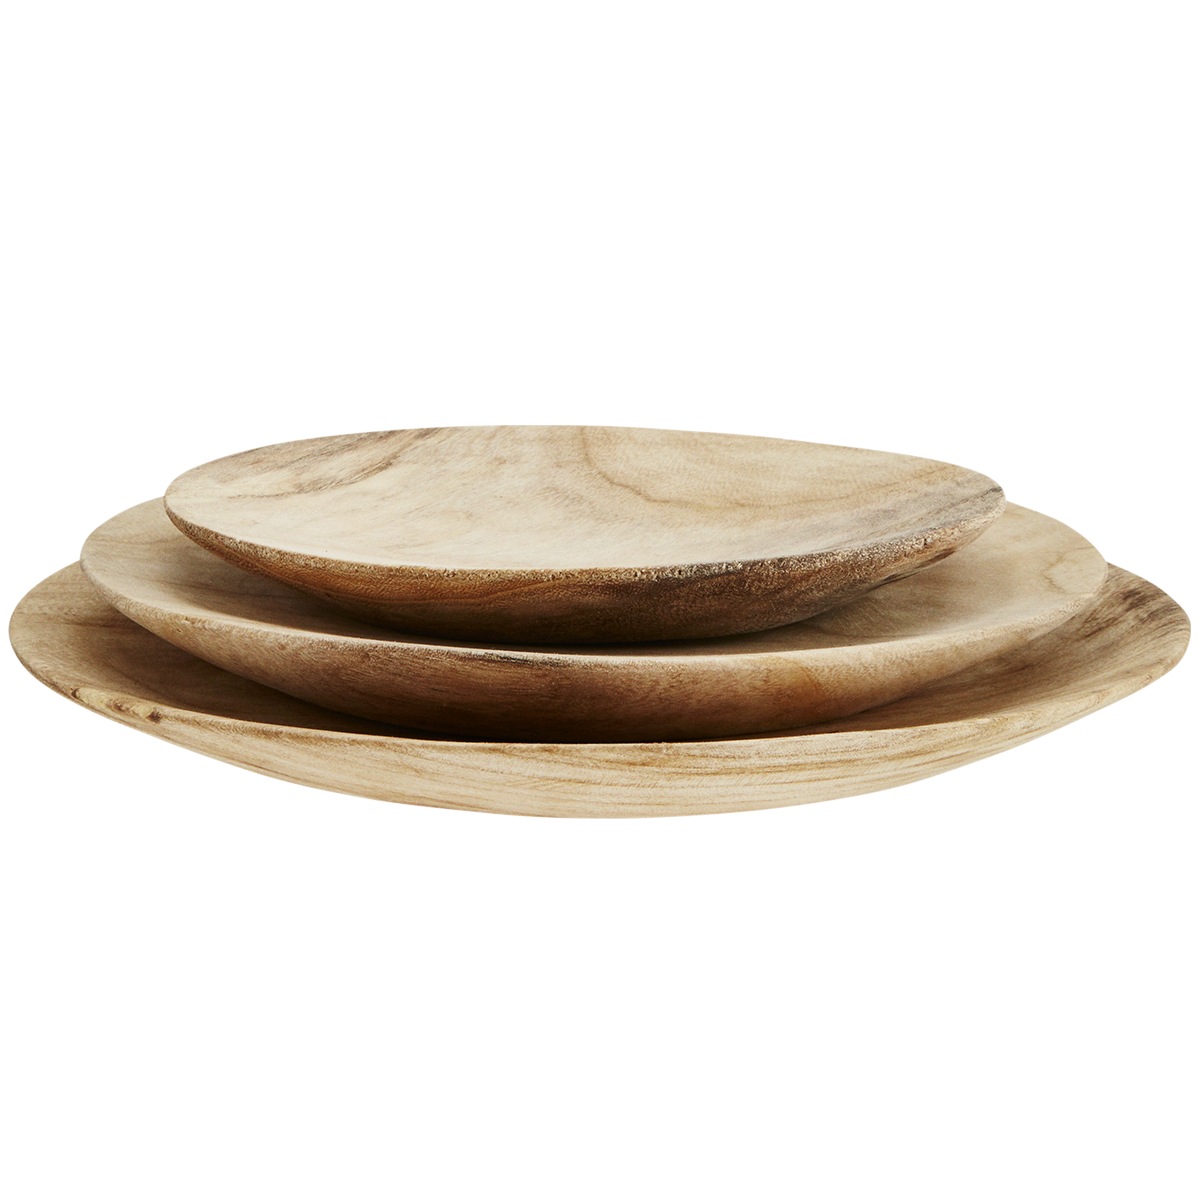 Round wooden plates, 3 Pcs